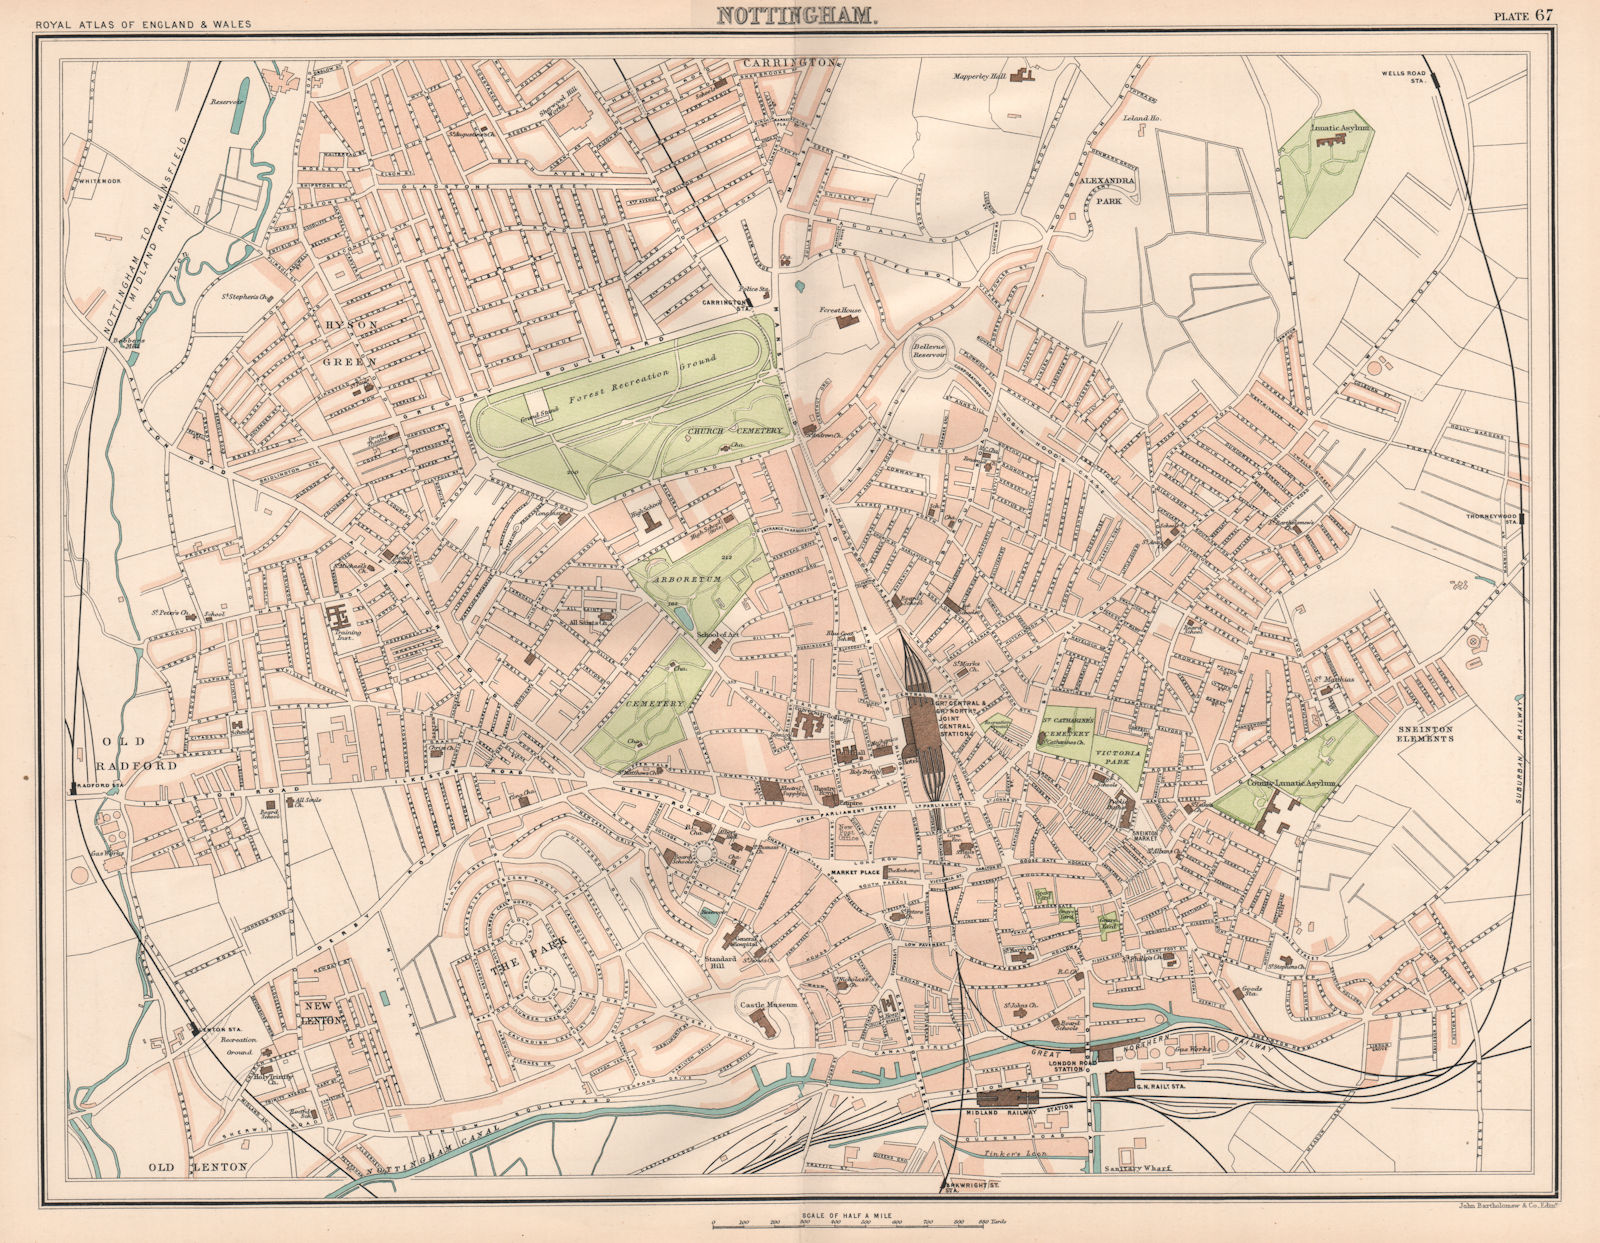 NOTTINGHAM antique town city plan. BARTHOLOMEW 1898 old map chart